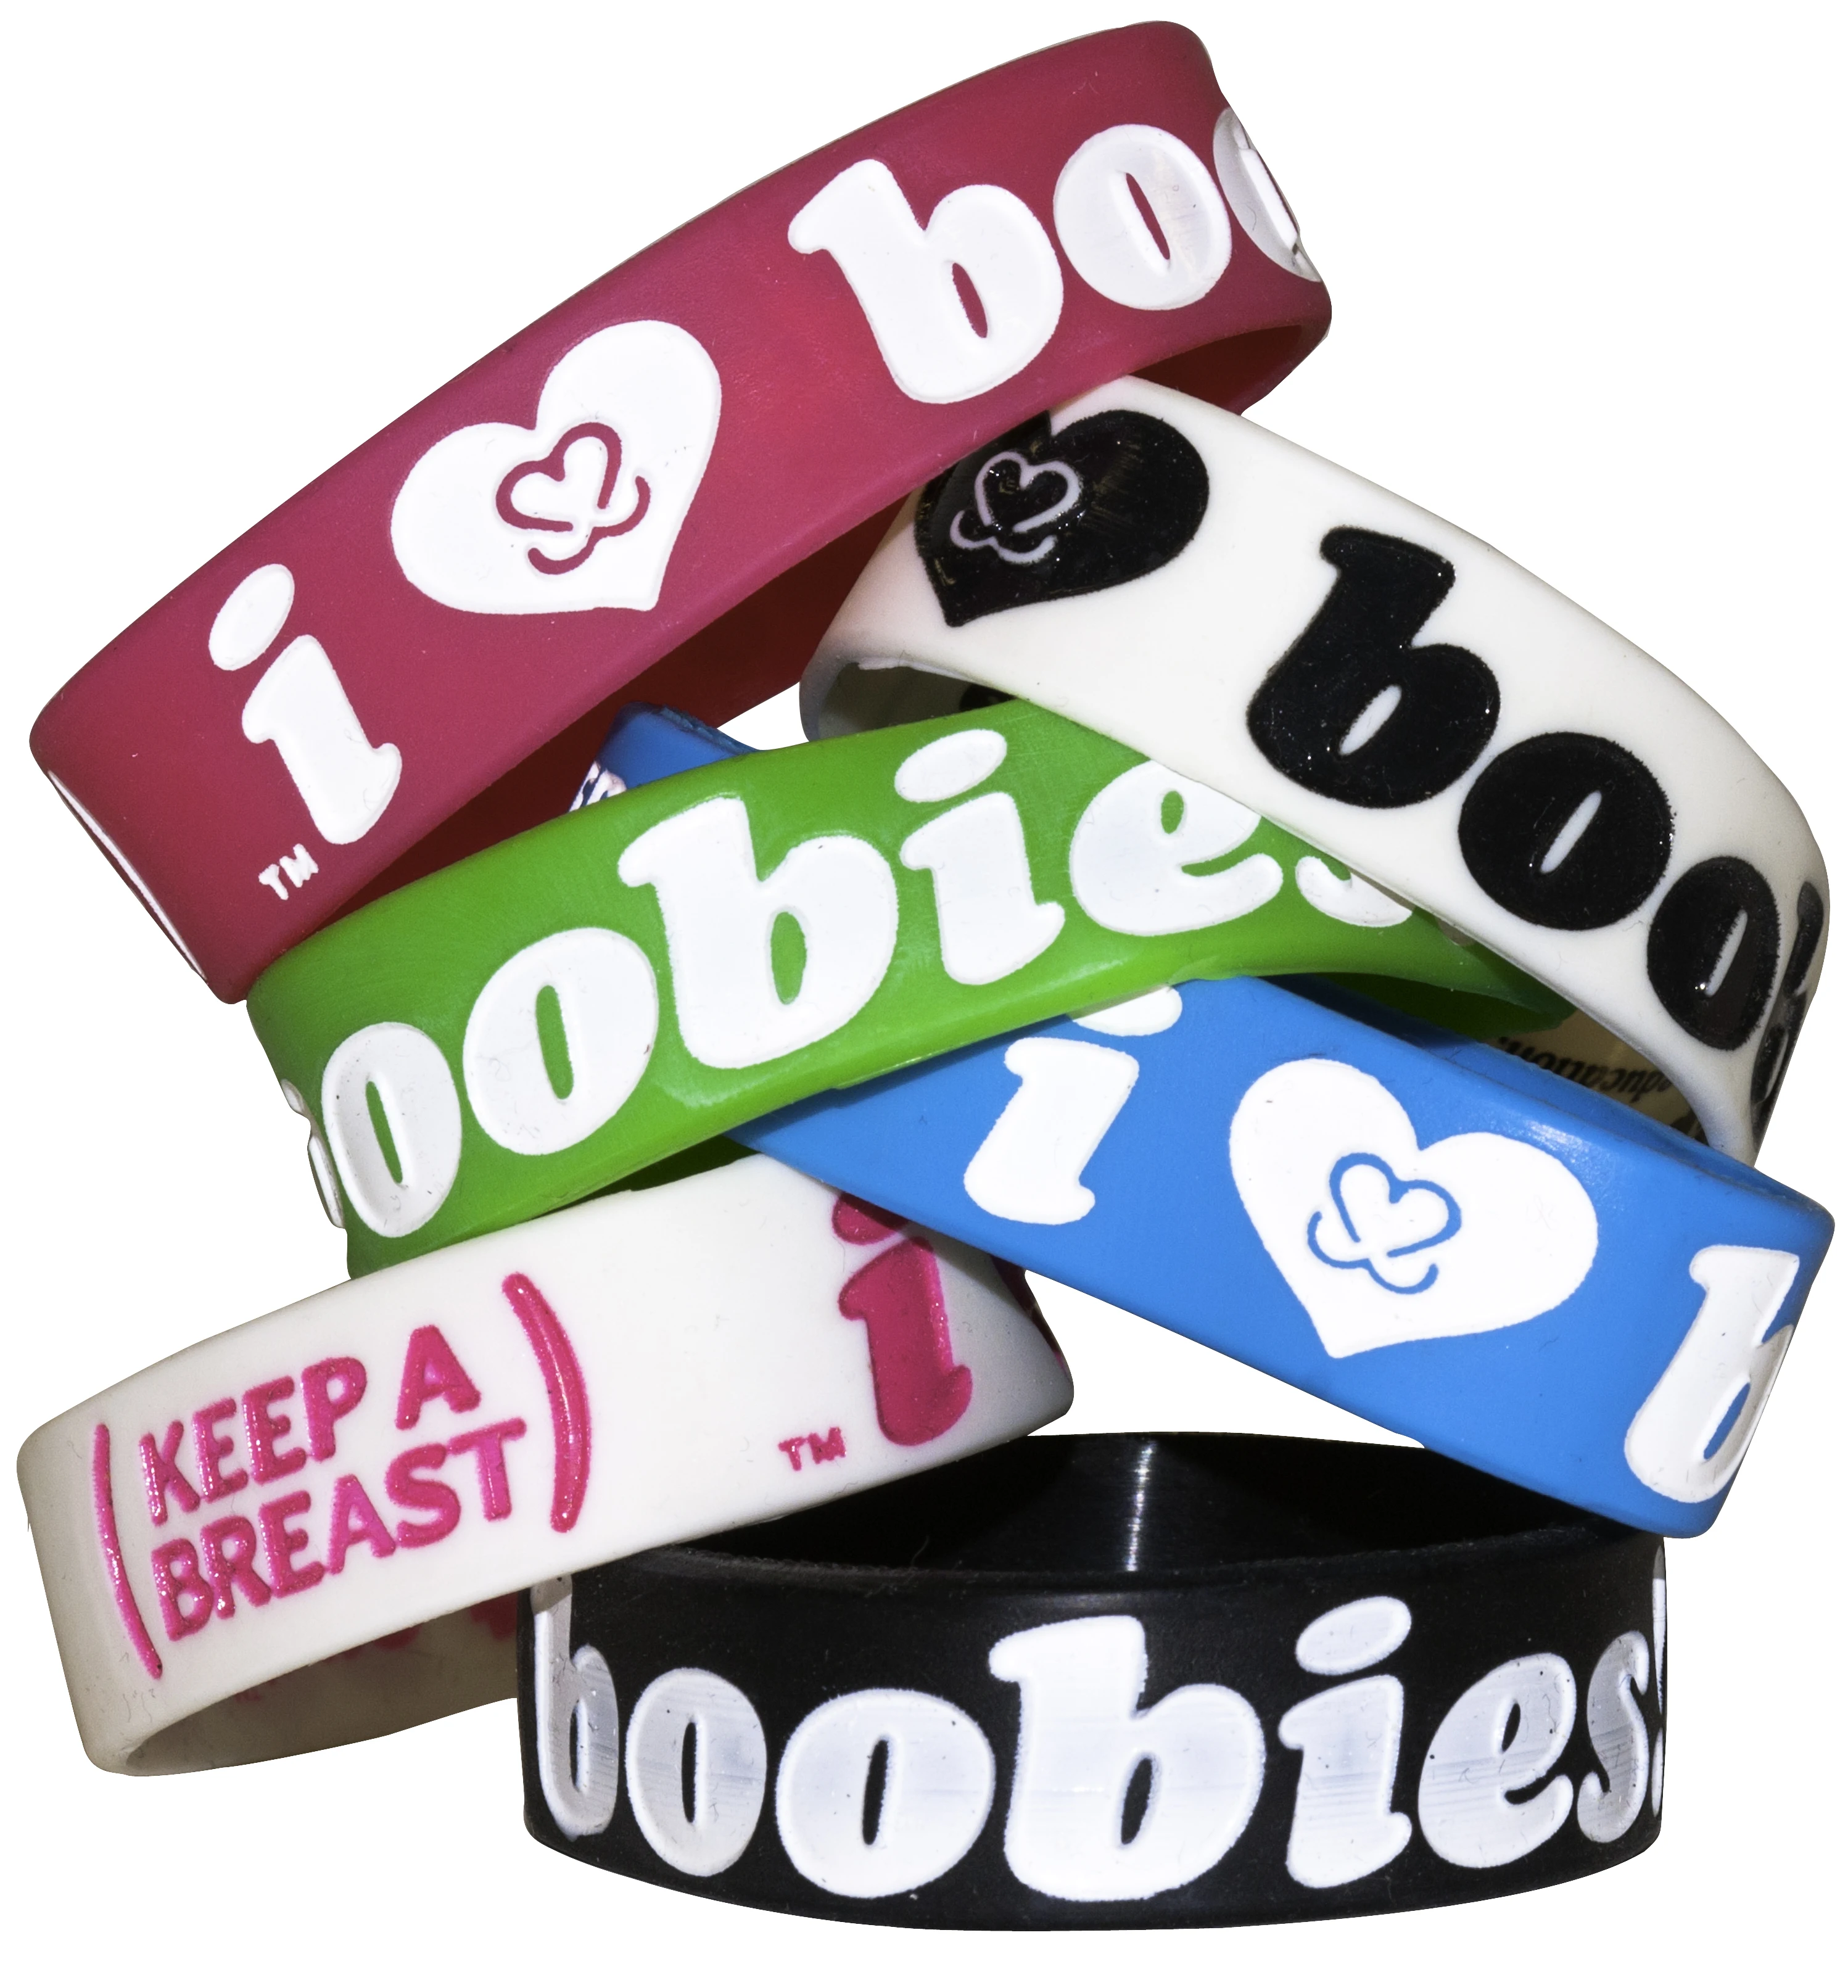 Boobies' bracelet ban